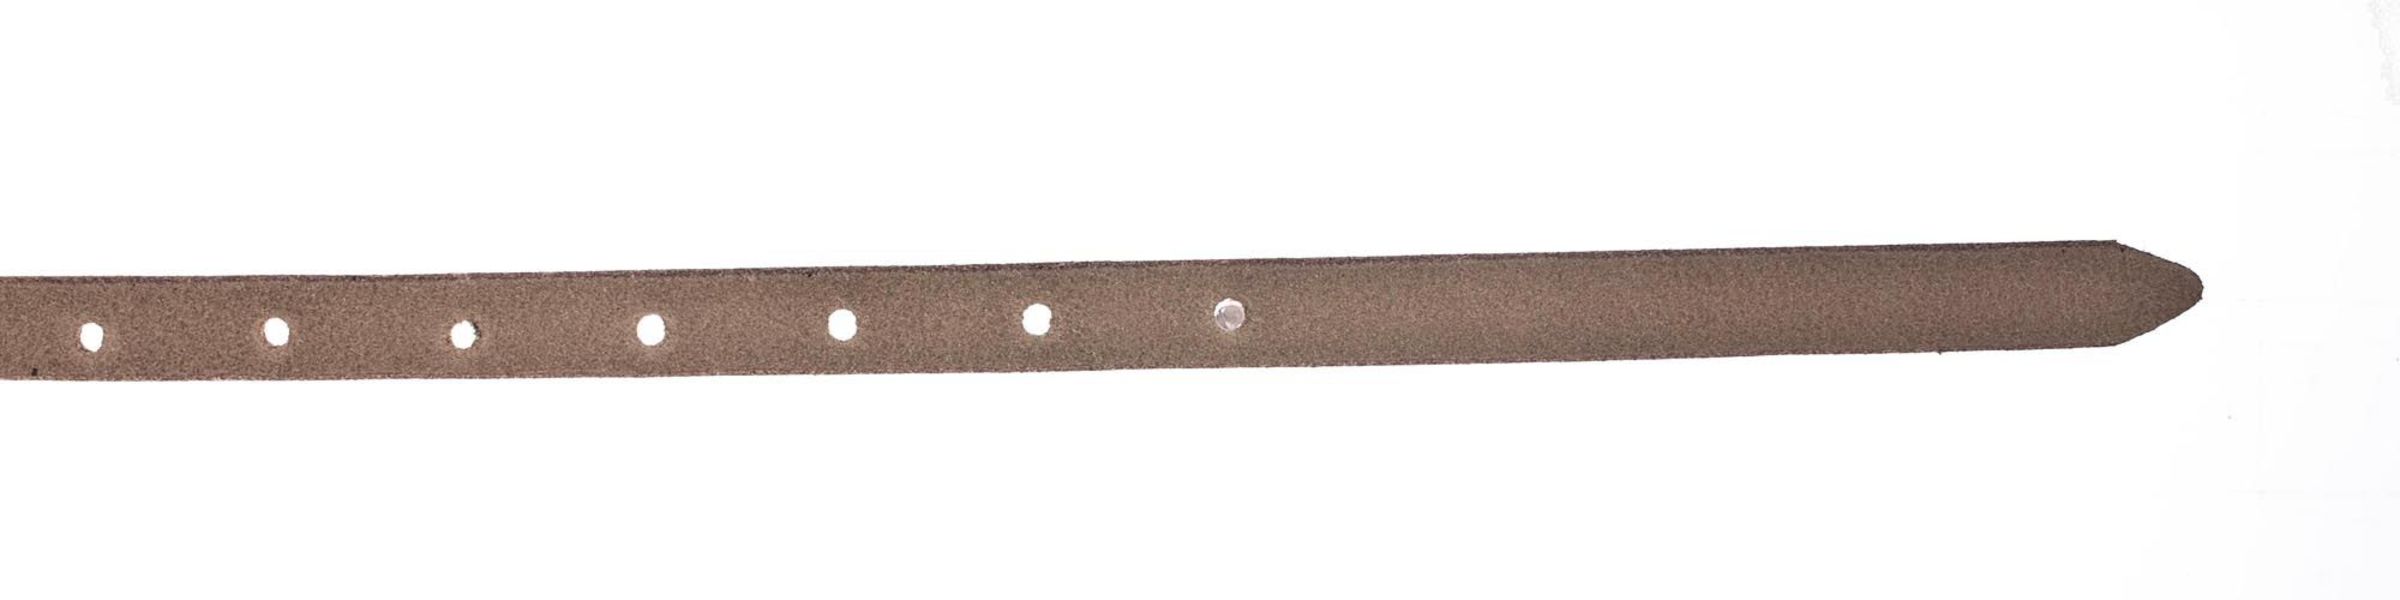 Vanzetti Leather belt - gray (0150)